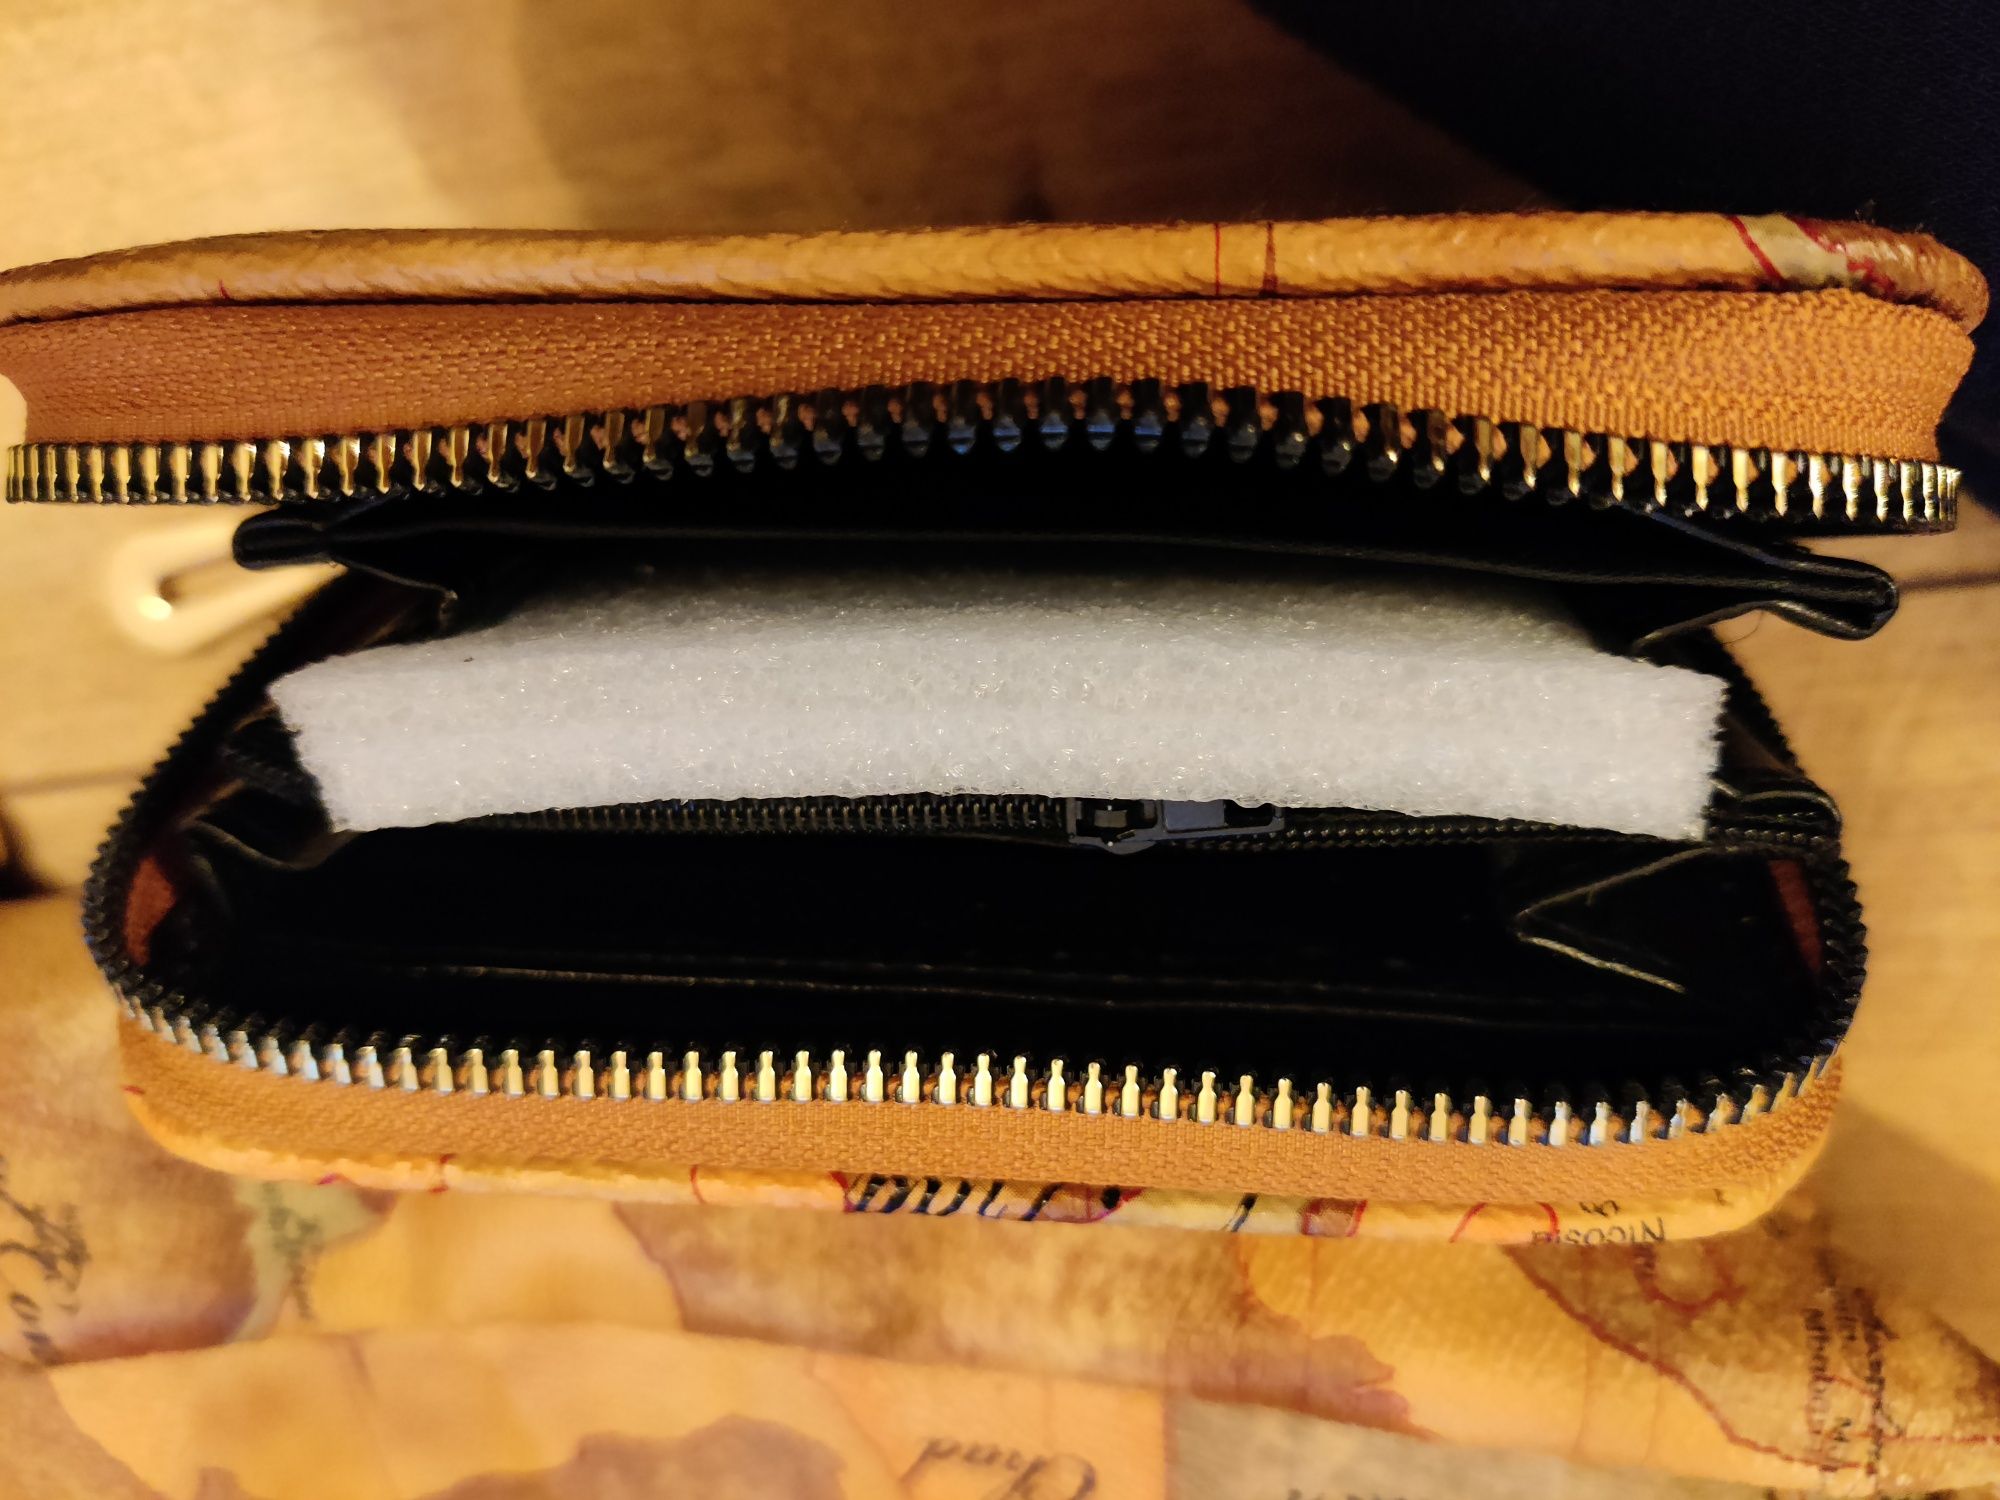 Rucsac din Egipt cu portofel